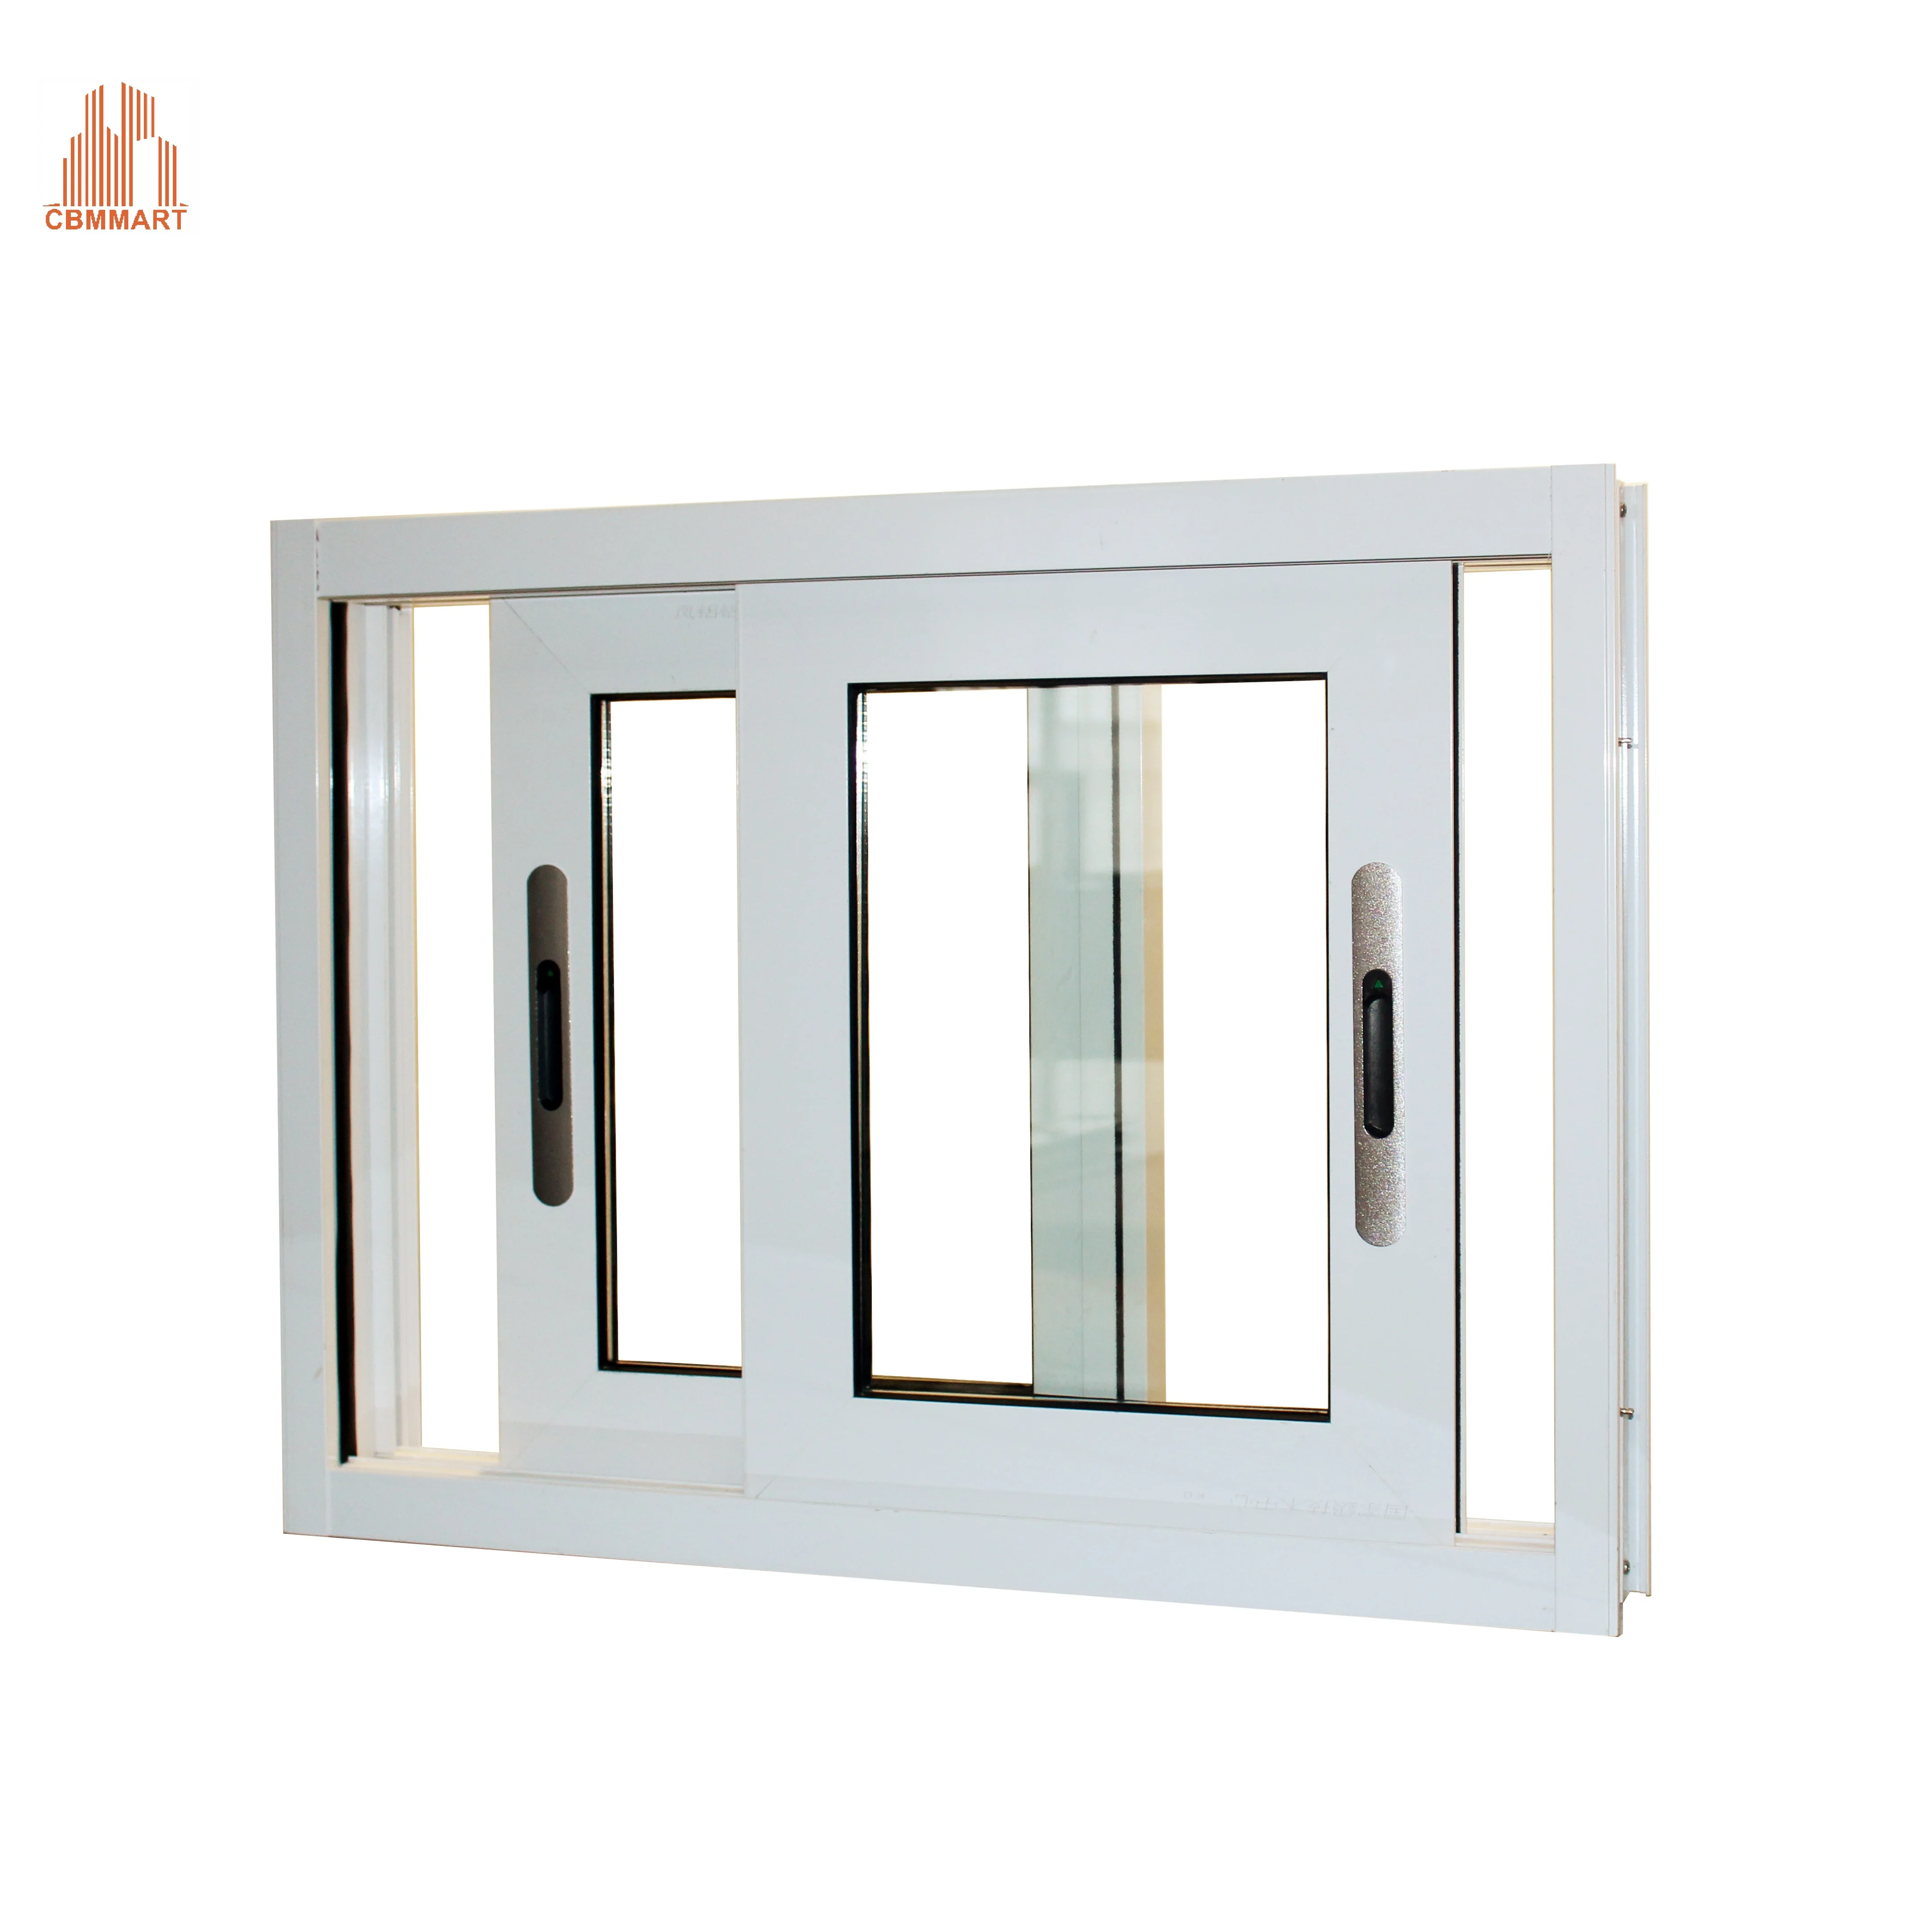 Favored frameless glass folding sliding terrace glazing door with fully open style